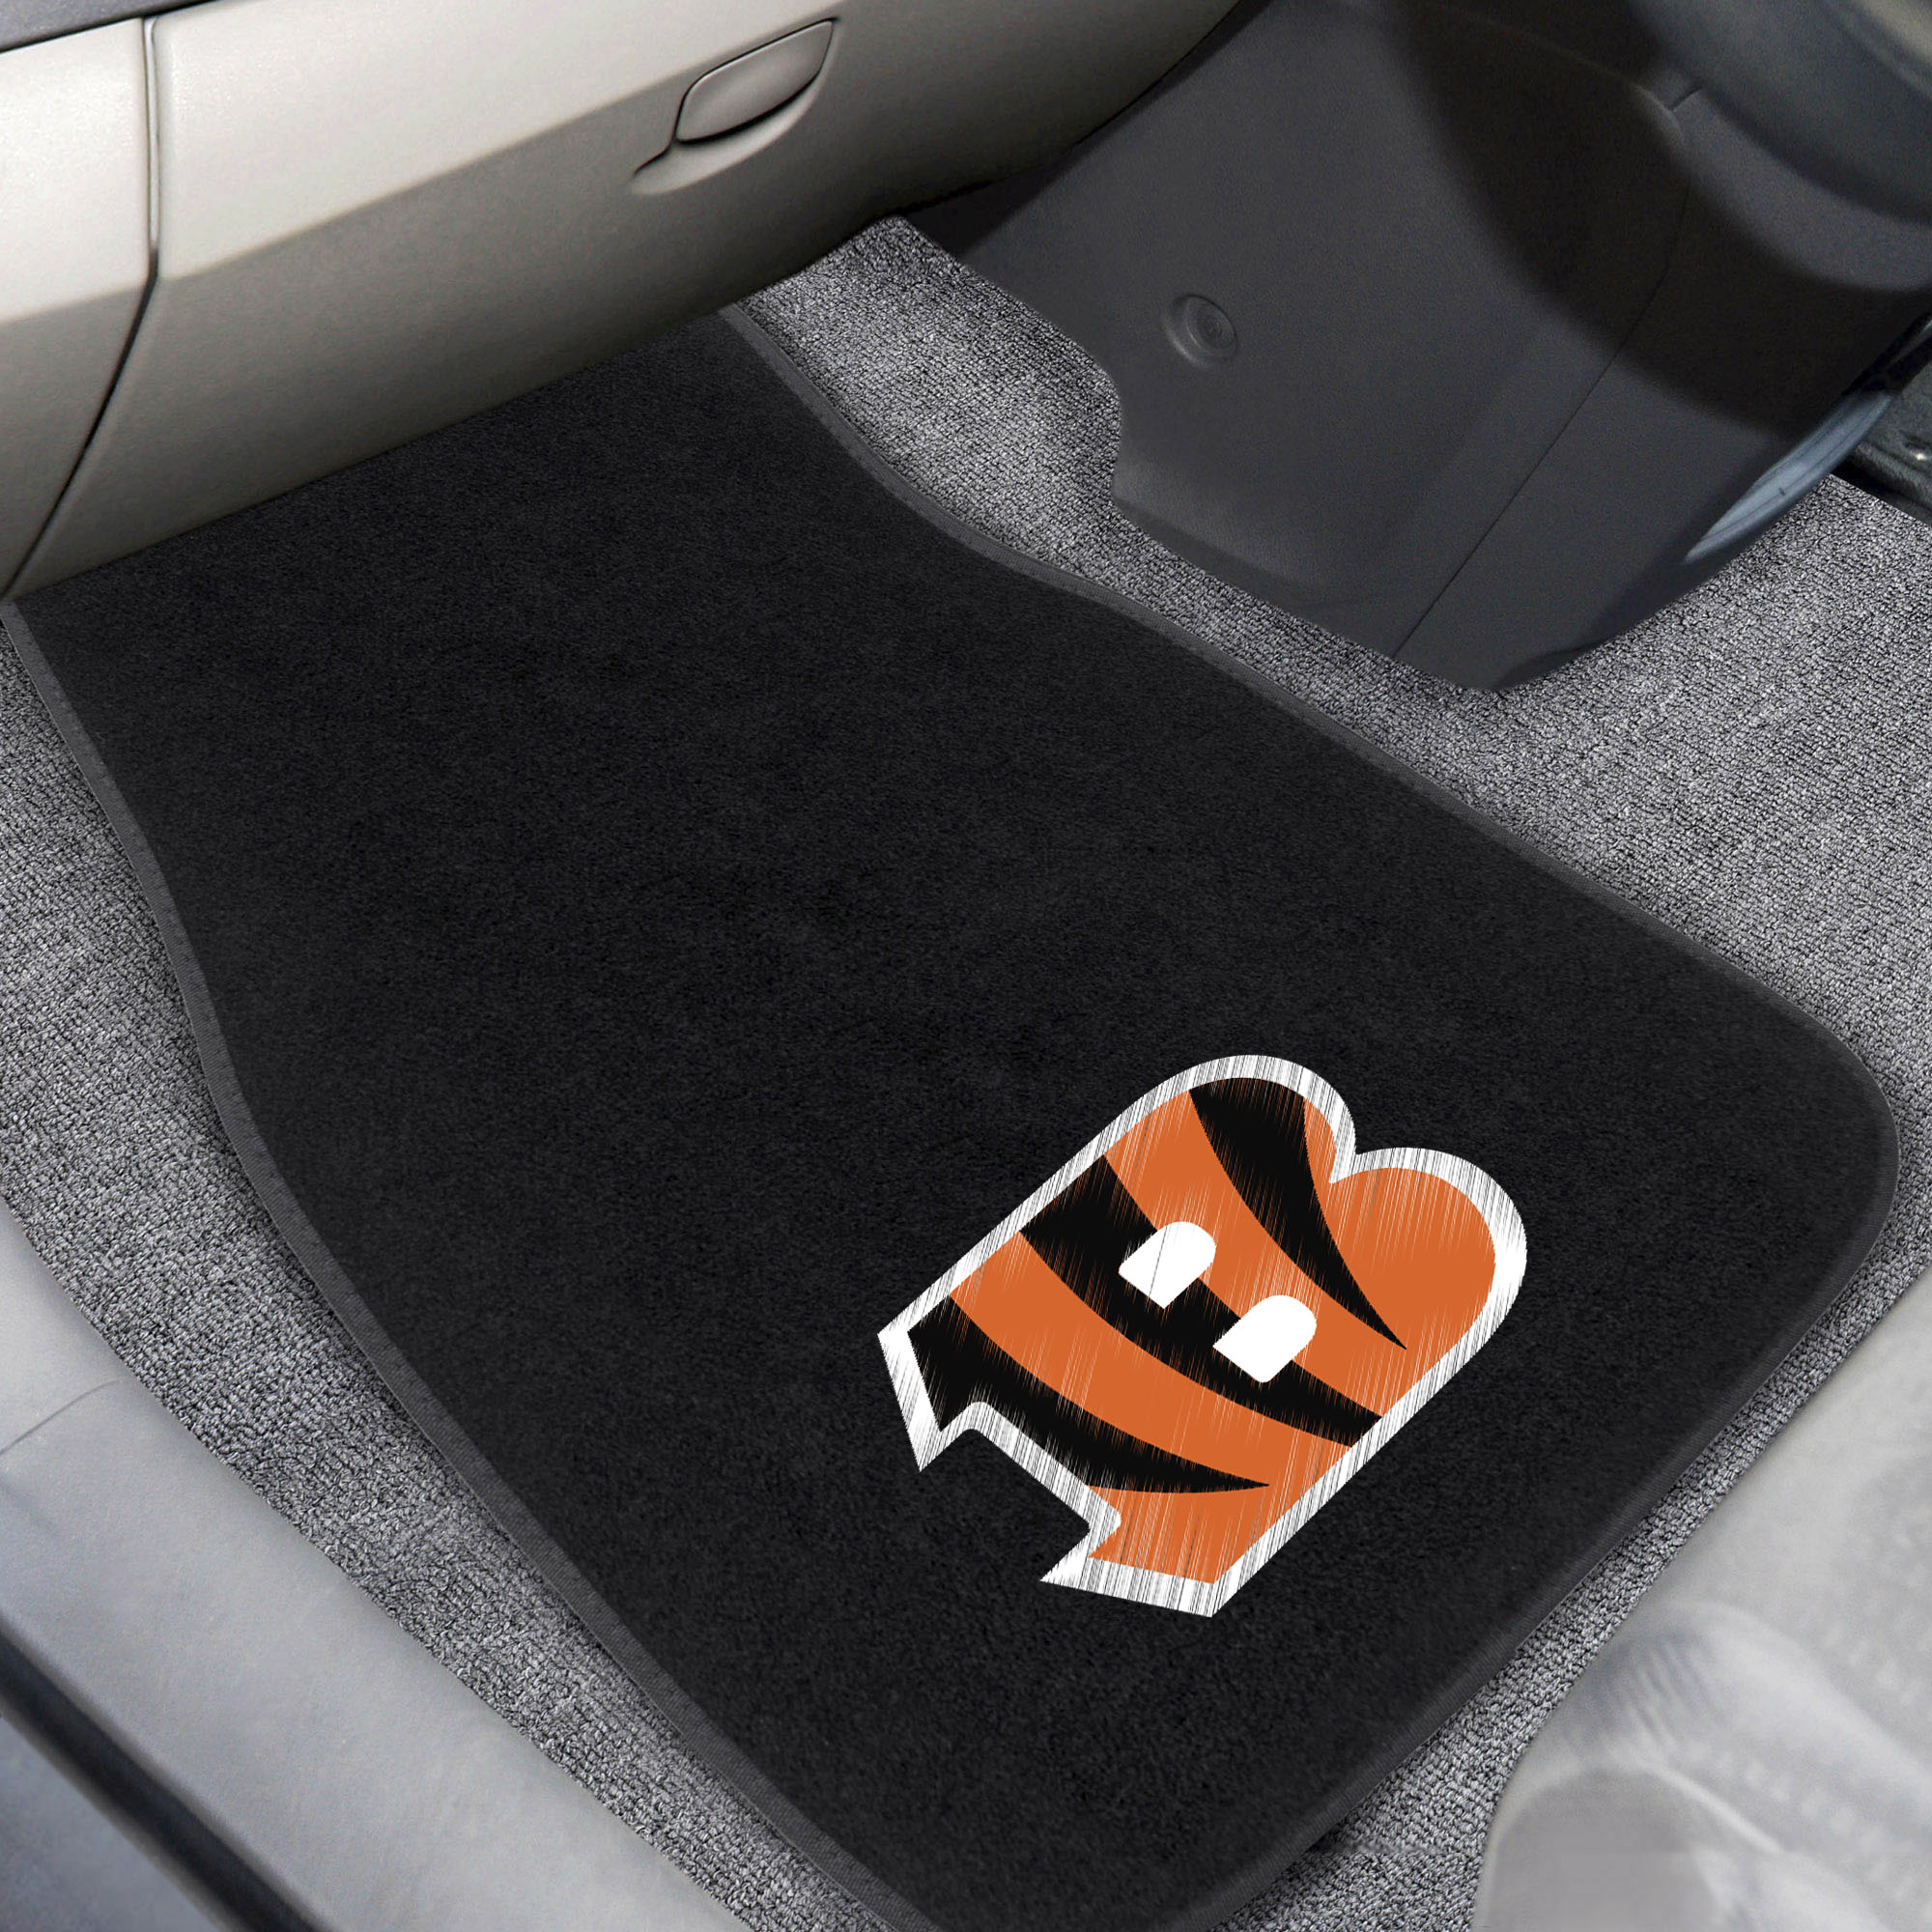 Cincinnati Bengals Embroidered Car Mat Set – Carpet